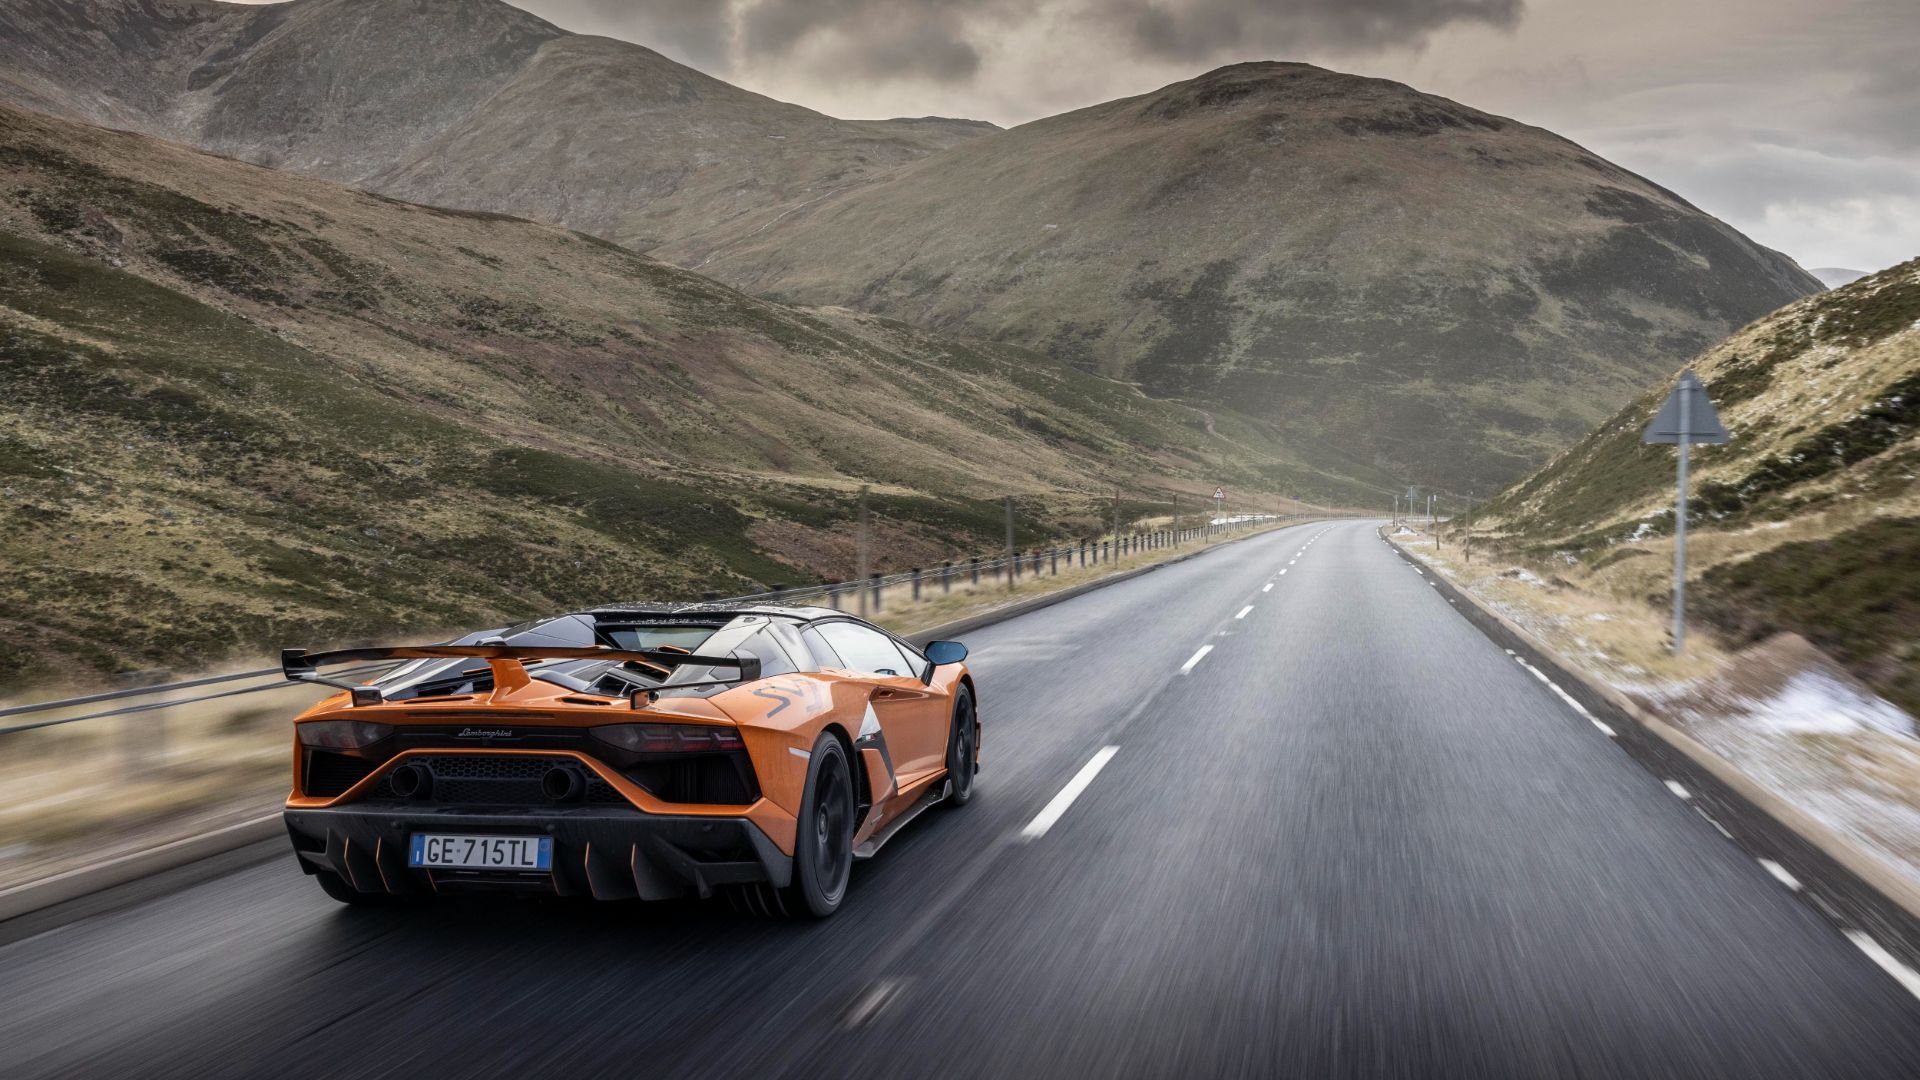 Highland fling: an incredible Lamborghini road-trip